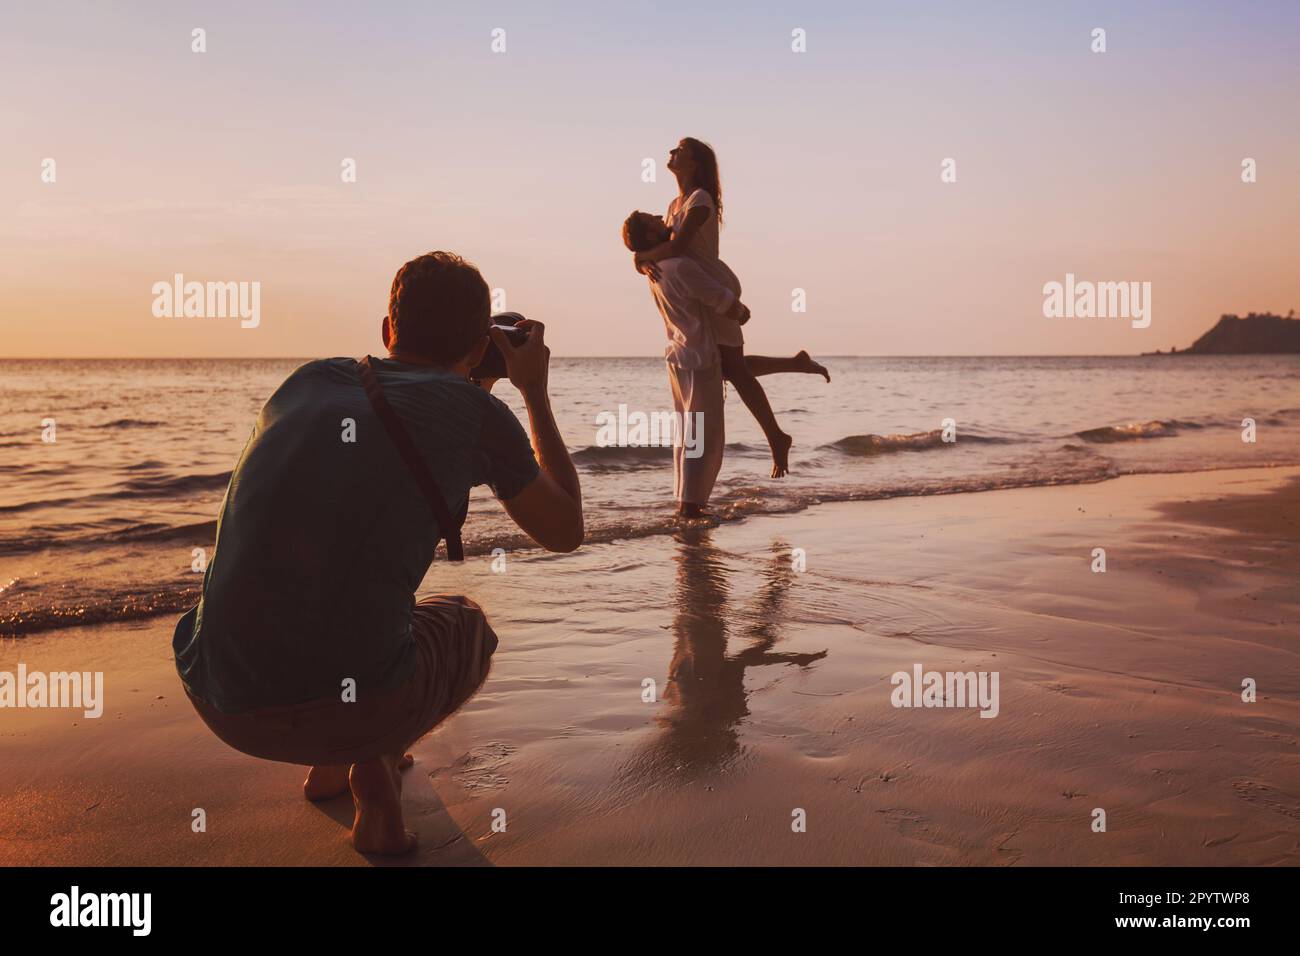 wedding portrait photographer taking photos of honeymoon couple on the beach at sunset, professional photography Stock Photo